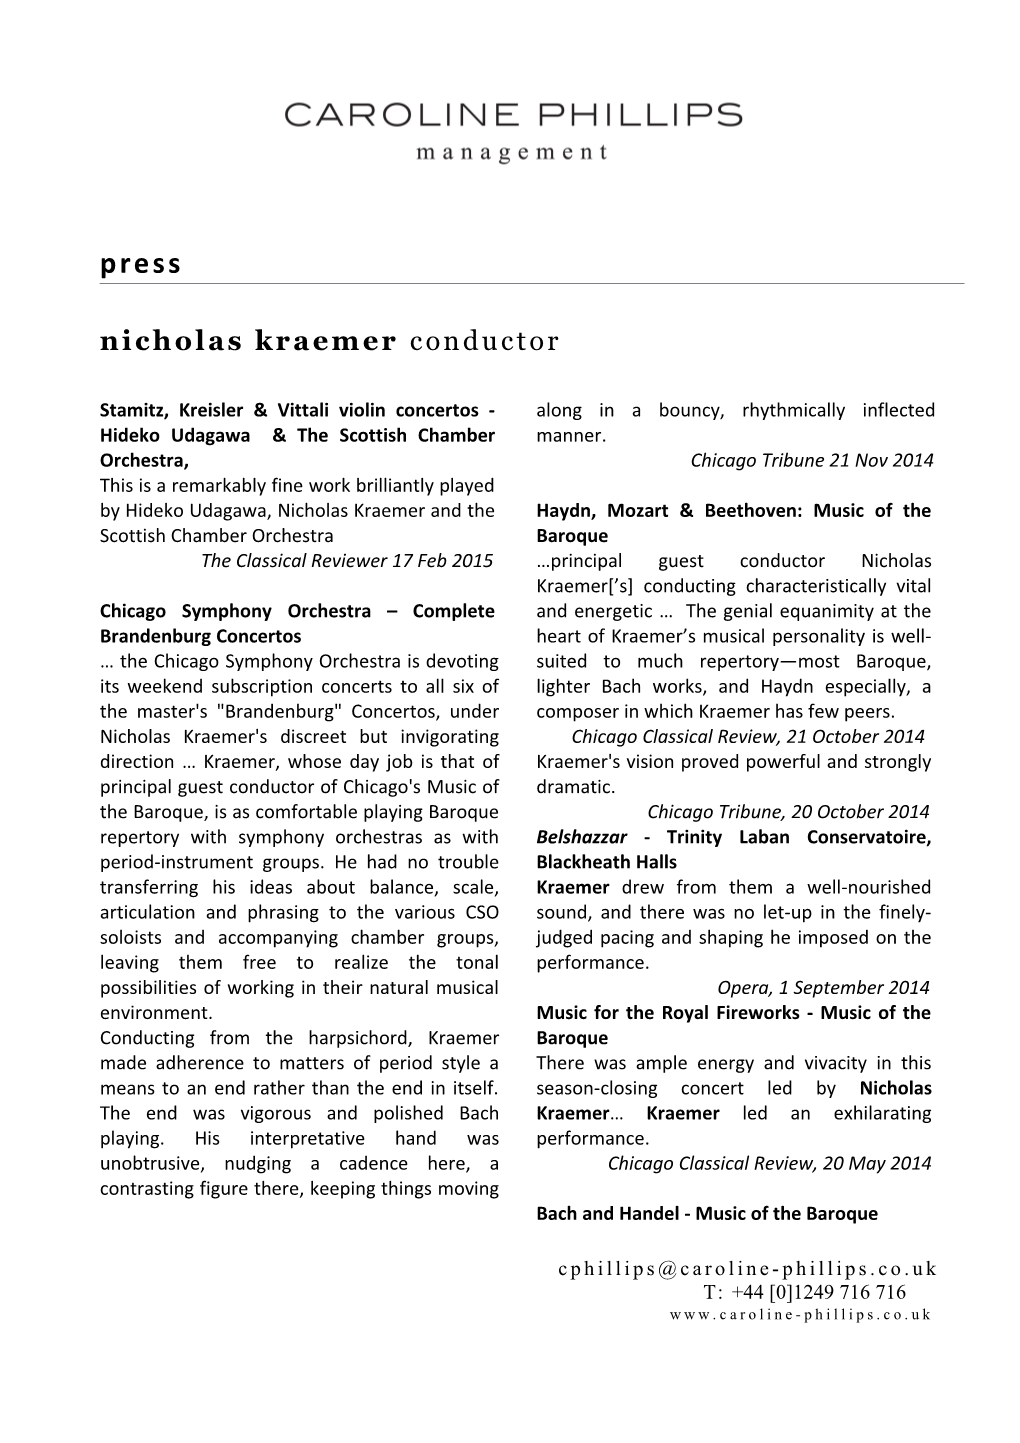 Stamitz, Kreisler & Vittali Violin Concertos - Hideko Udagawa & the Scottish Chamber Orchestra